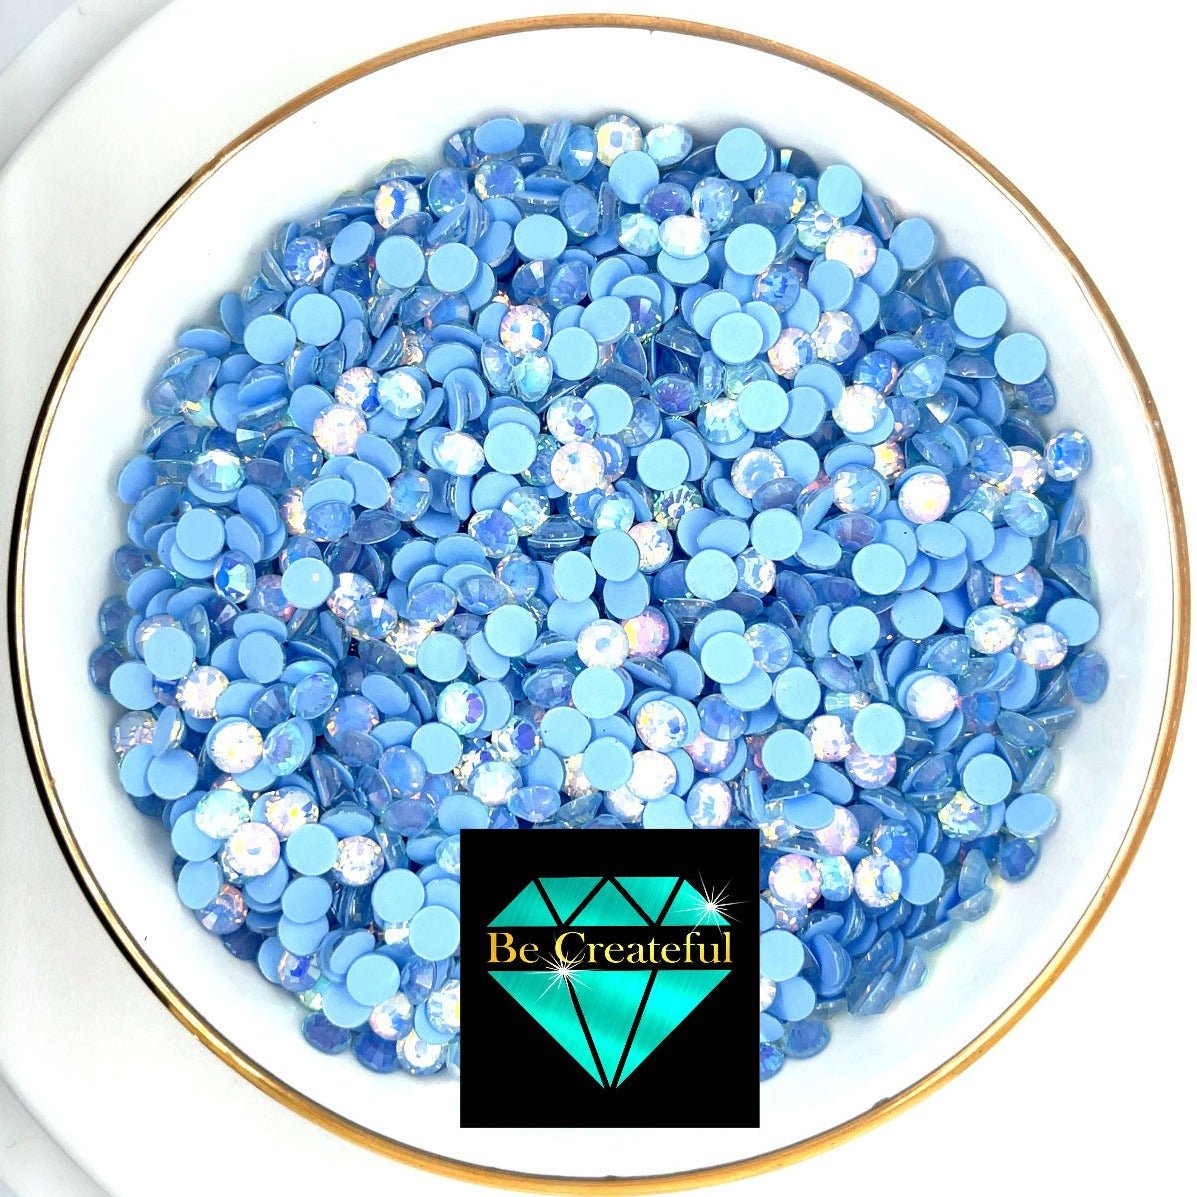 Luminous Opal Blue Flatback Glass Rhinestones - Glass Rhinestone -Mixed sized rhinestones - Multi-size rhinestones